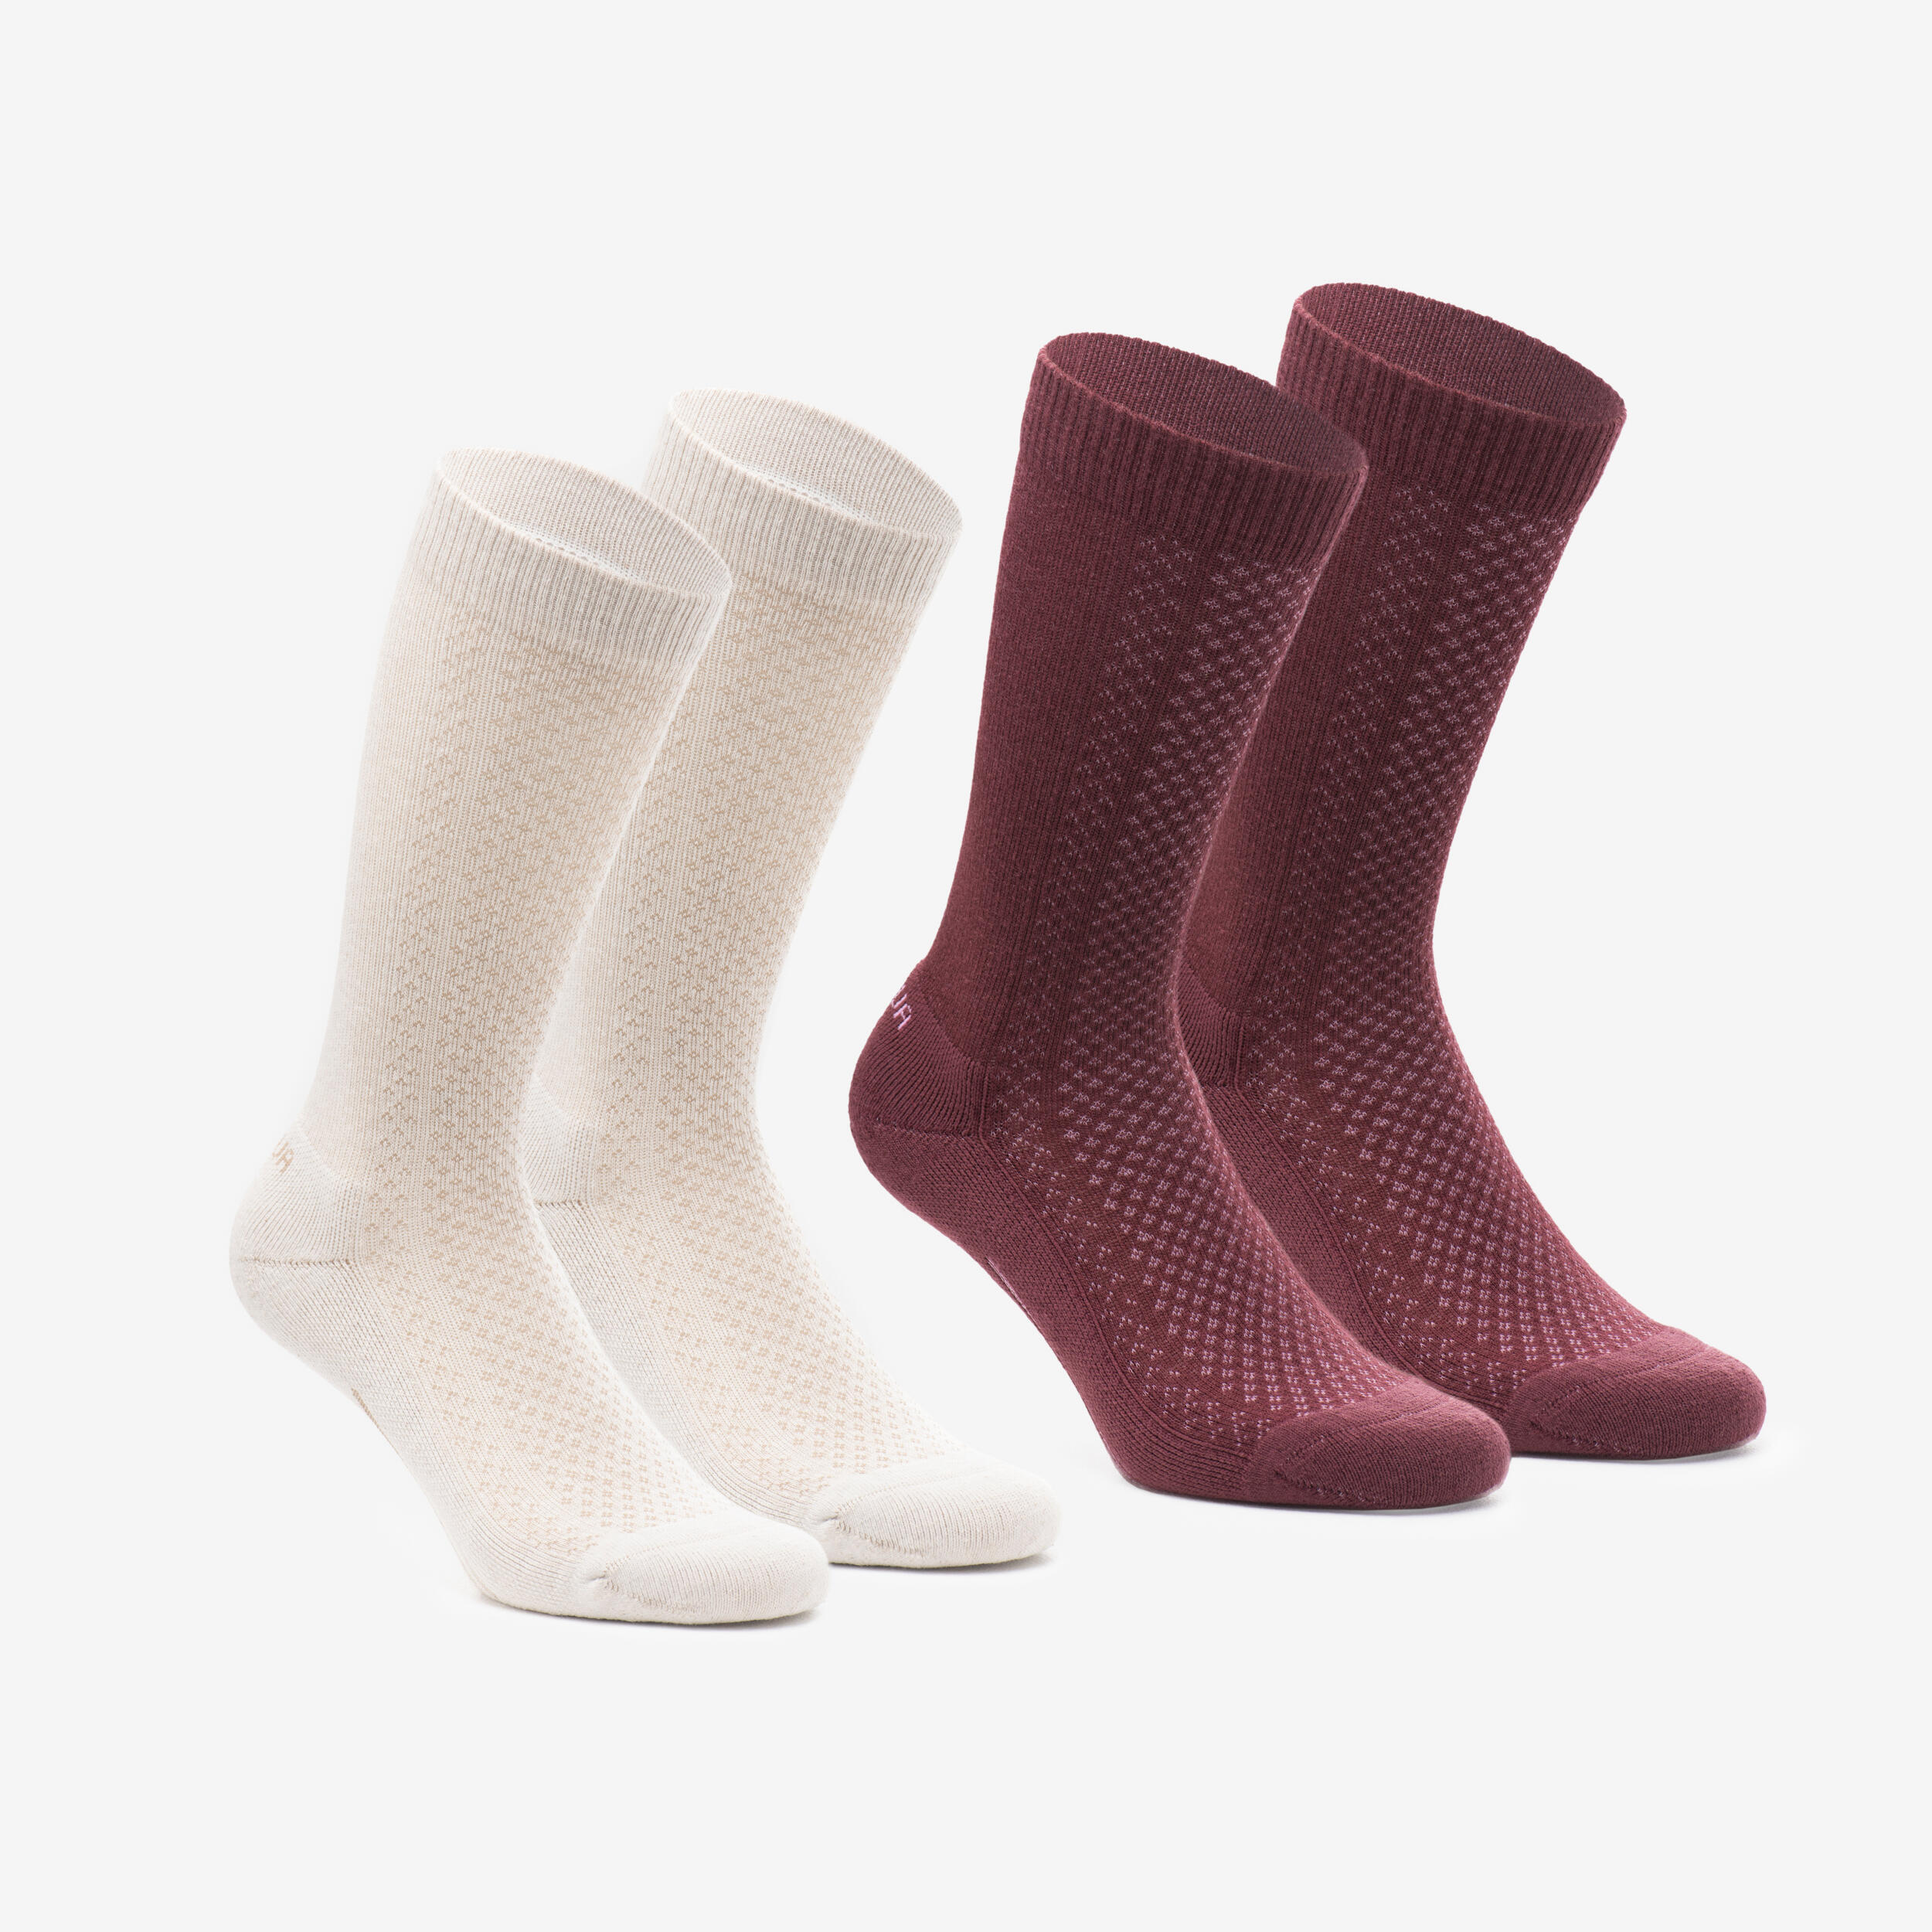 QUECHUA Hike 100 High Socks  - Beige Burgundy-Lyocell& Linen-Pack of 2 pairs